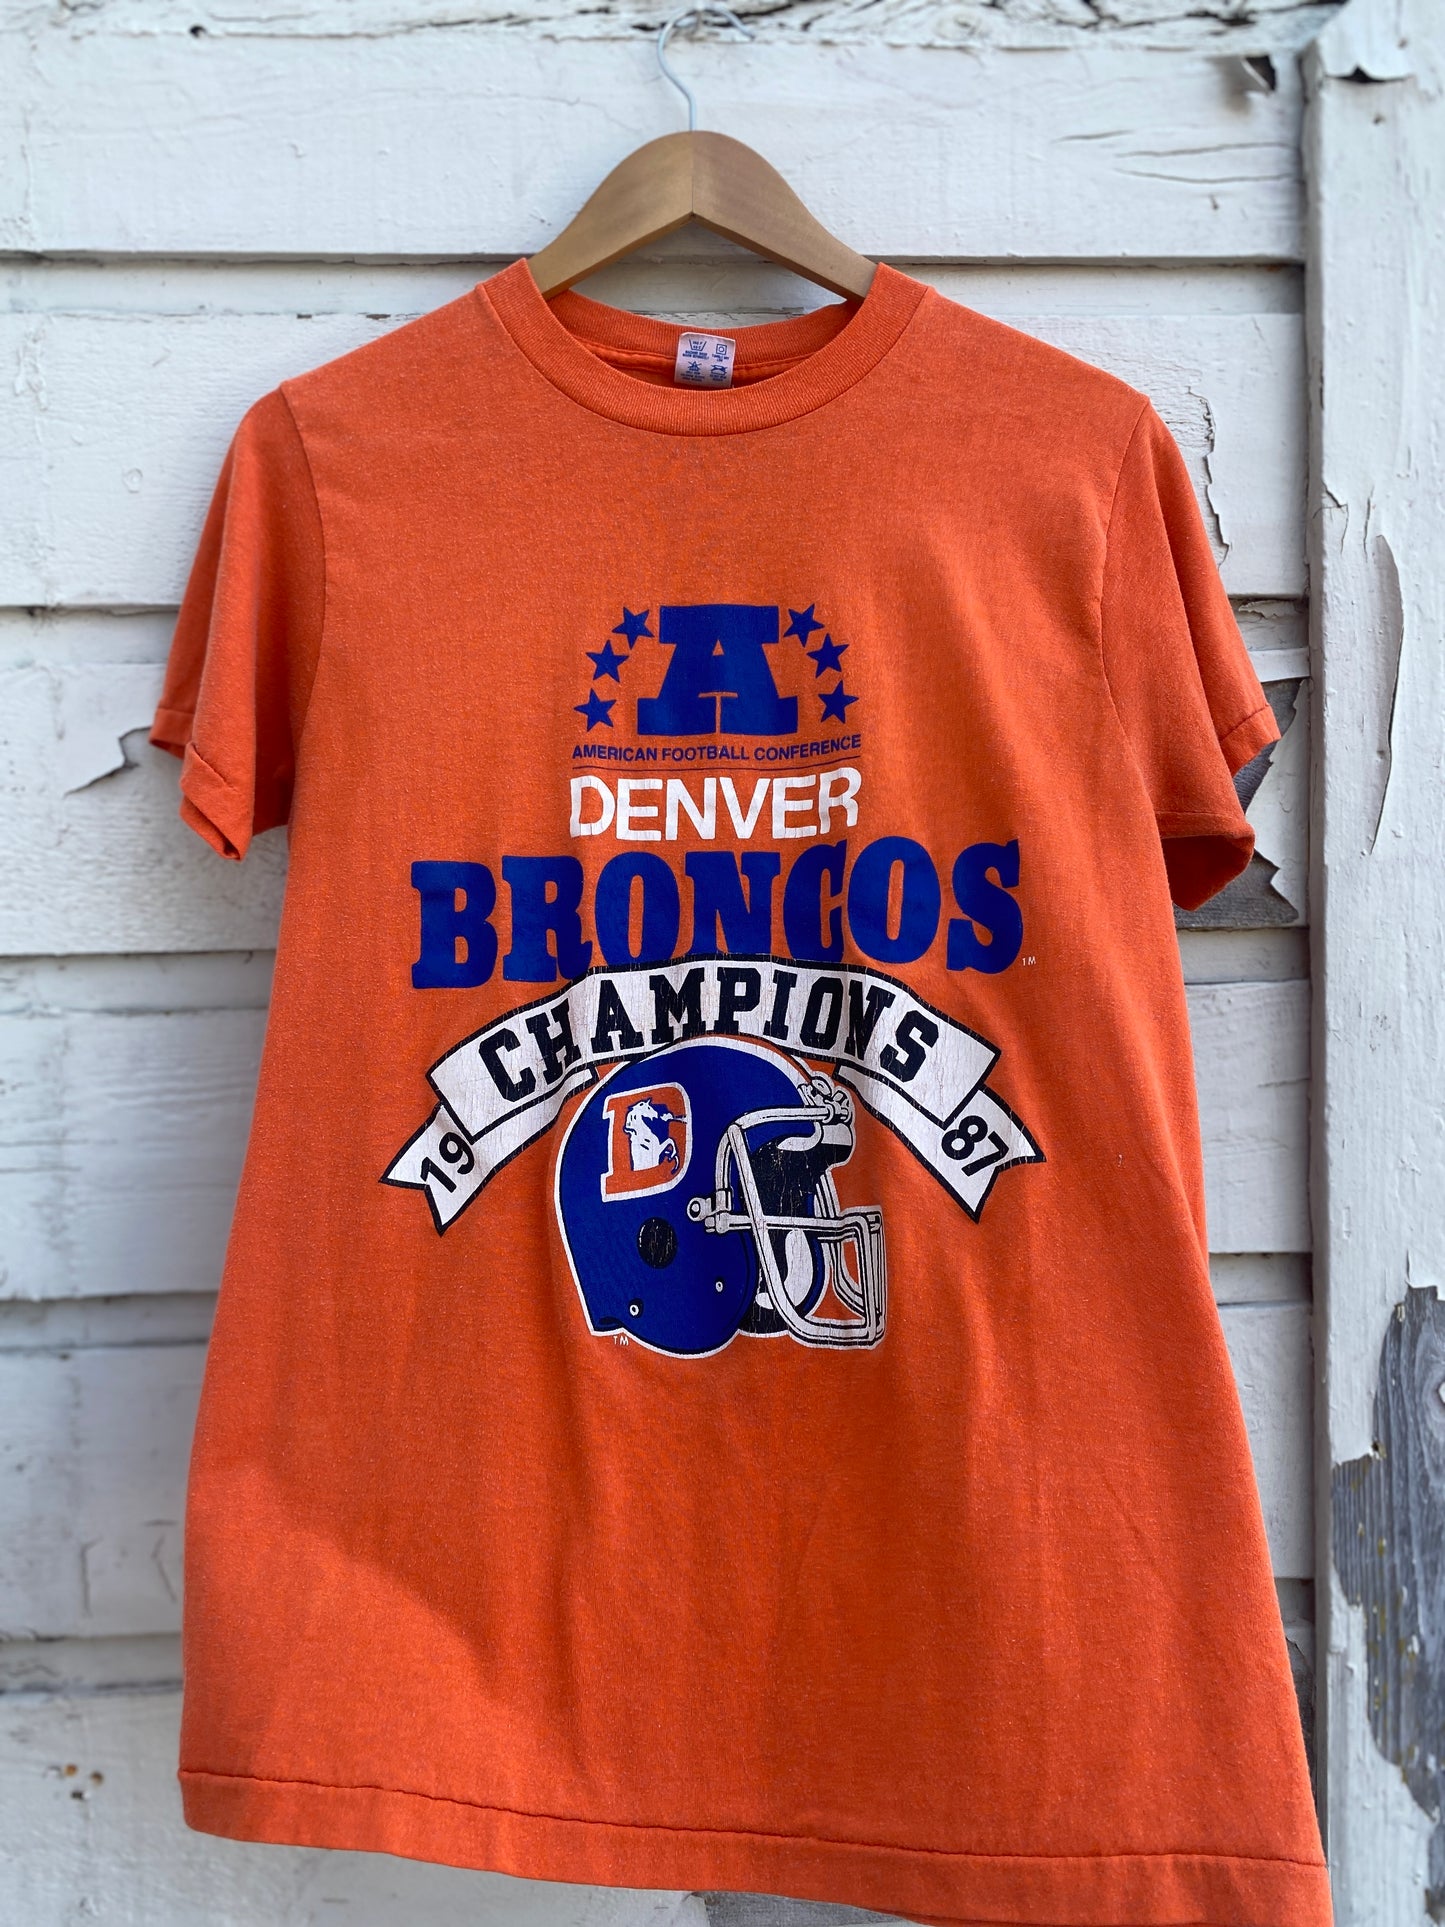 Vintage 1987 Denver Broncos Championship Tshirt Medium